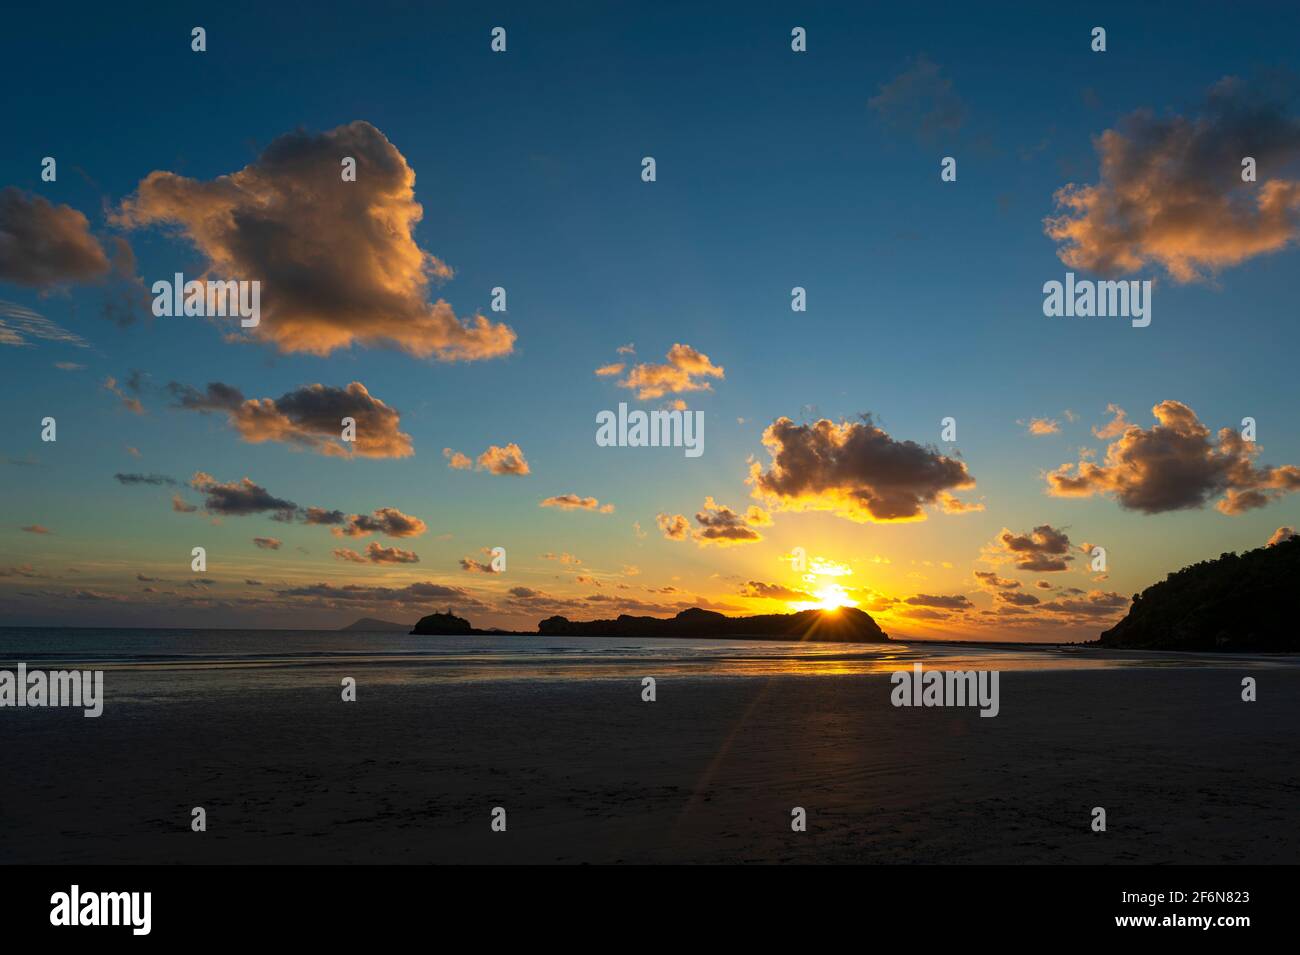 Atmospheric view of sun on the horizon at sunrise on the beach, Cape Hillsborough, Queensland, QLD, Australia Stock Photo